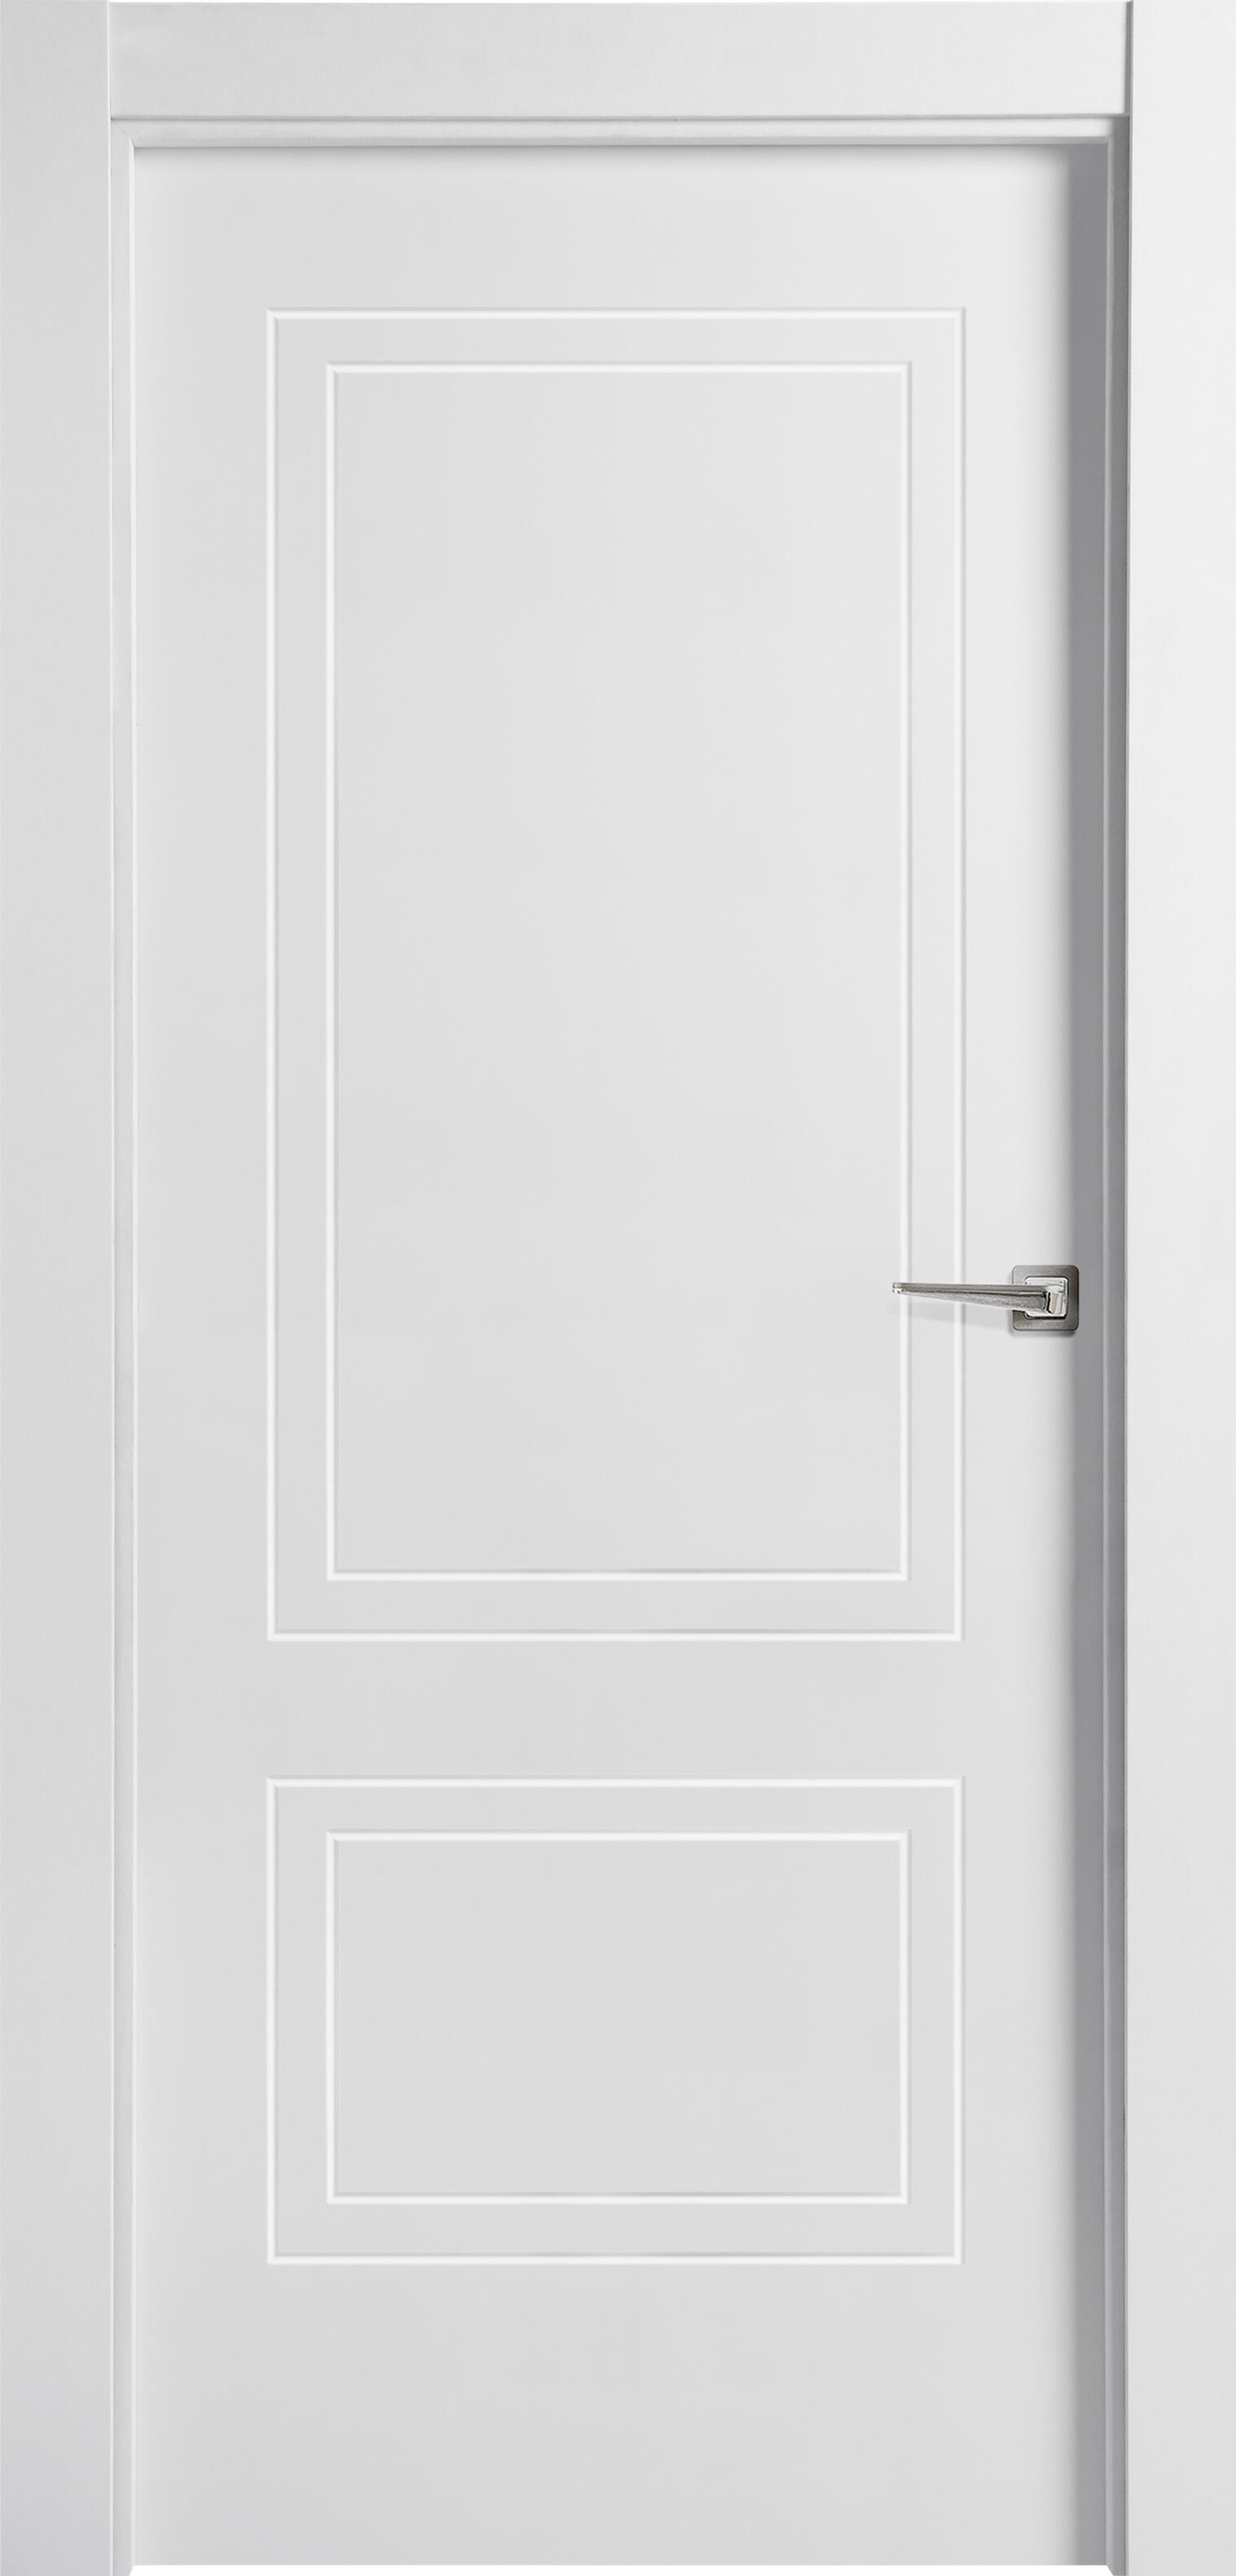 Puerta boston blanco de apertura izquierda de 11x 82.5 cm